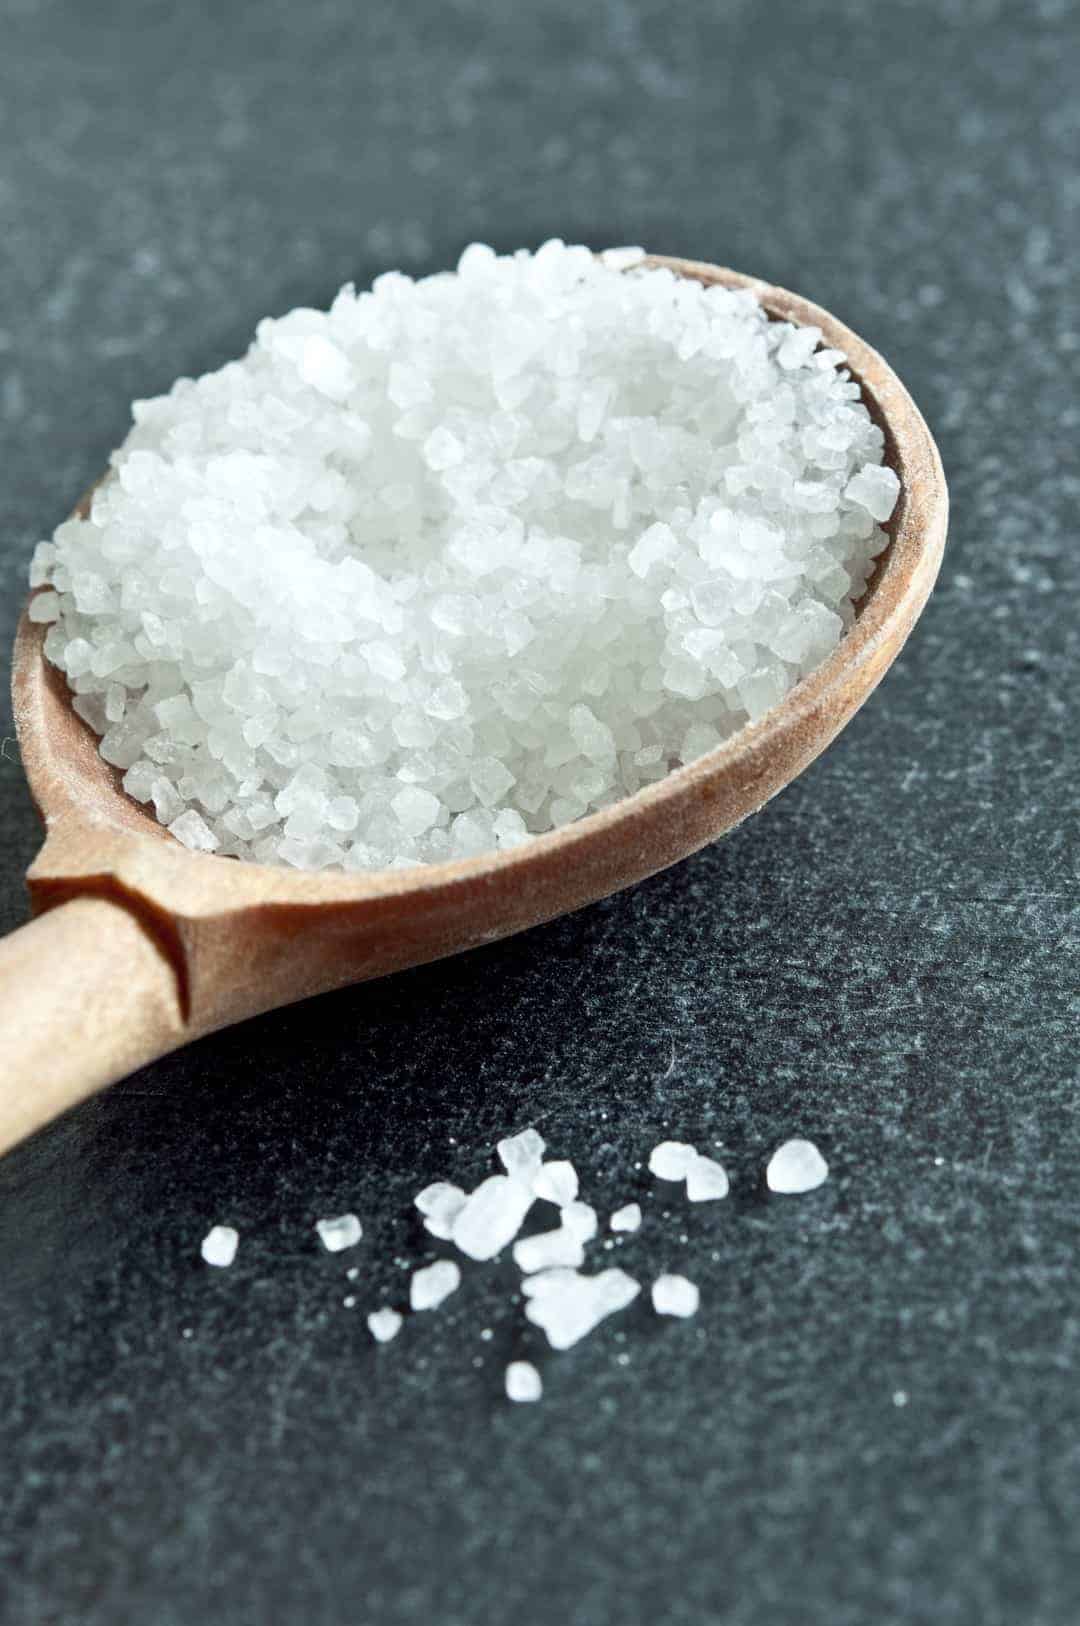 kosher salt